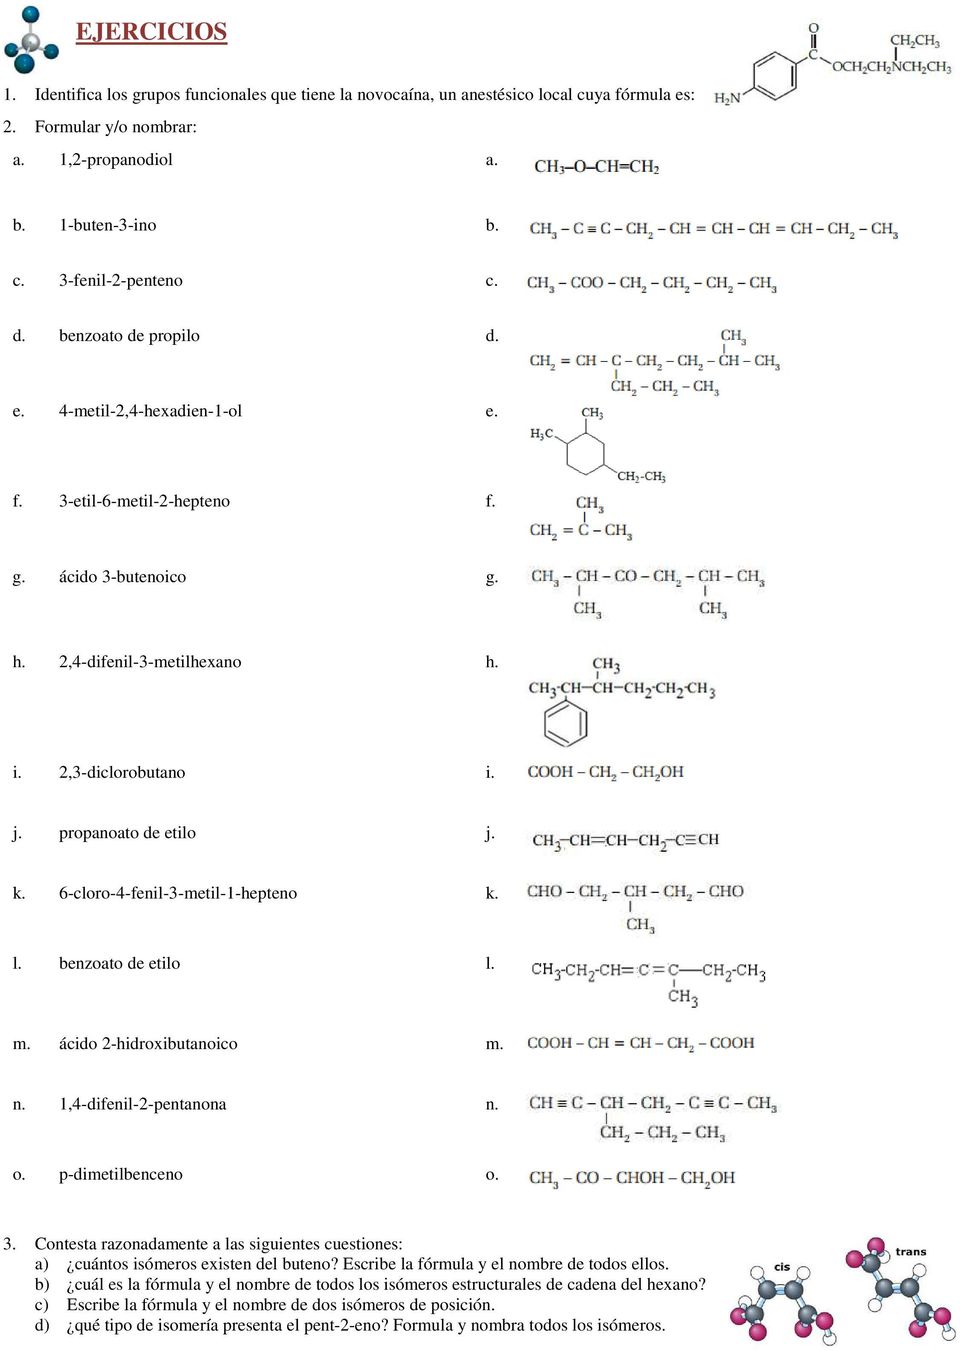 6-cloro-4-fenil-3-metil-1-hepteno k. l. benzoato de etilo l. m. ácido 2-hidroxibutanoico m. n. 1,4-difenil-2-pentanona n. o. p-dimetilbenceno o. 3.